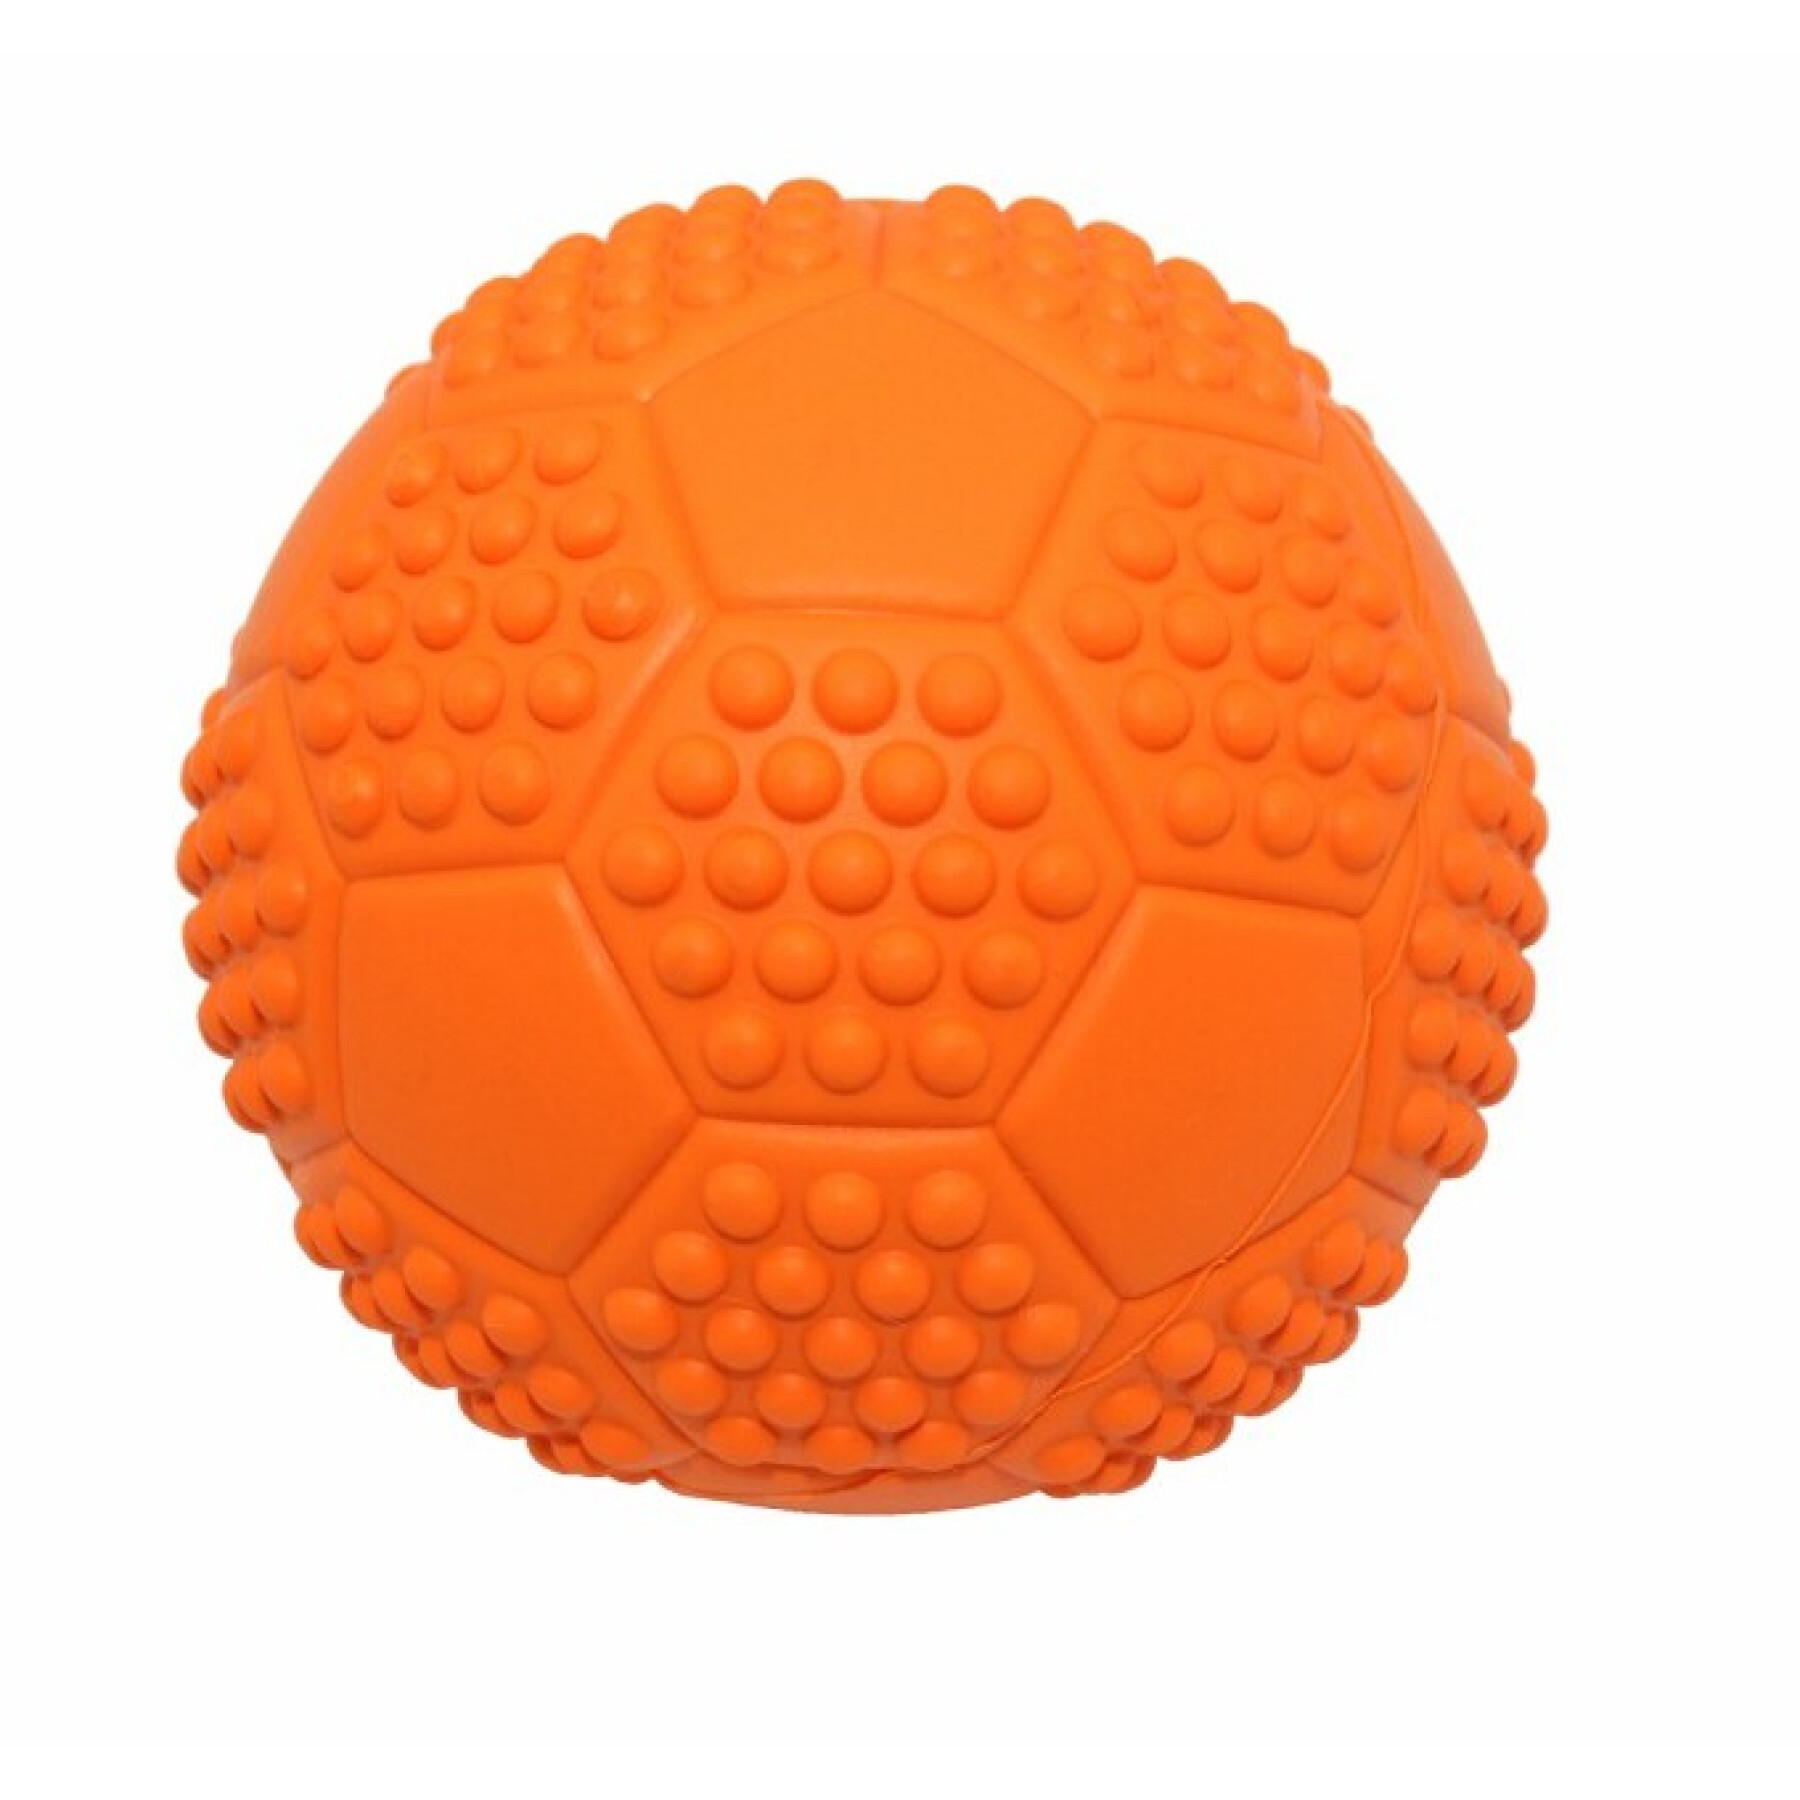 Bola de futebol de borracha para cães com guincho BUBU Pets